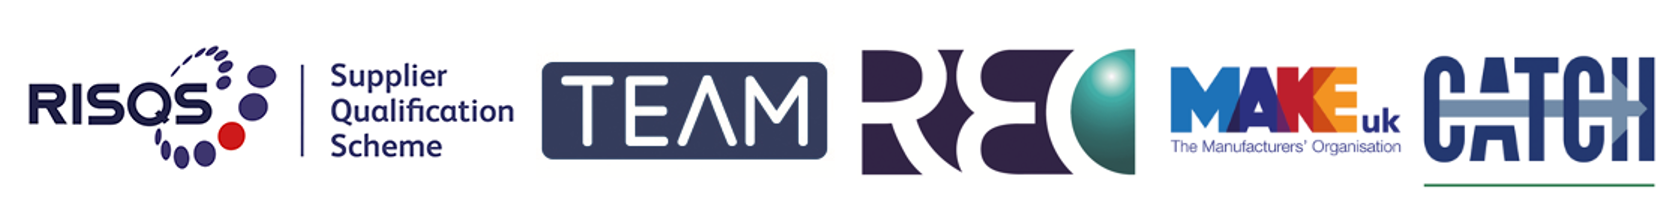 Risqs logo, REC logo, Make UK logo, CATCH logo